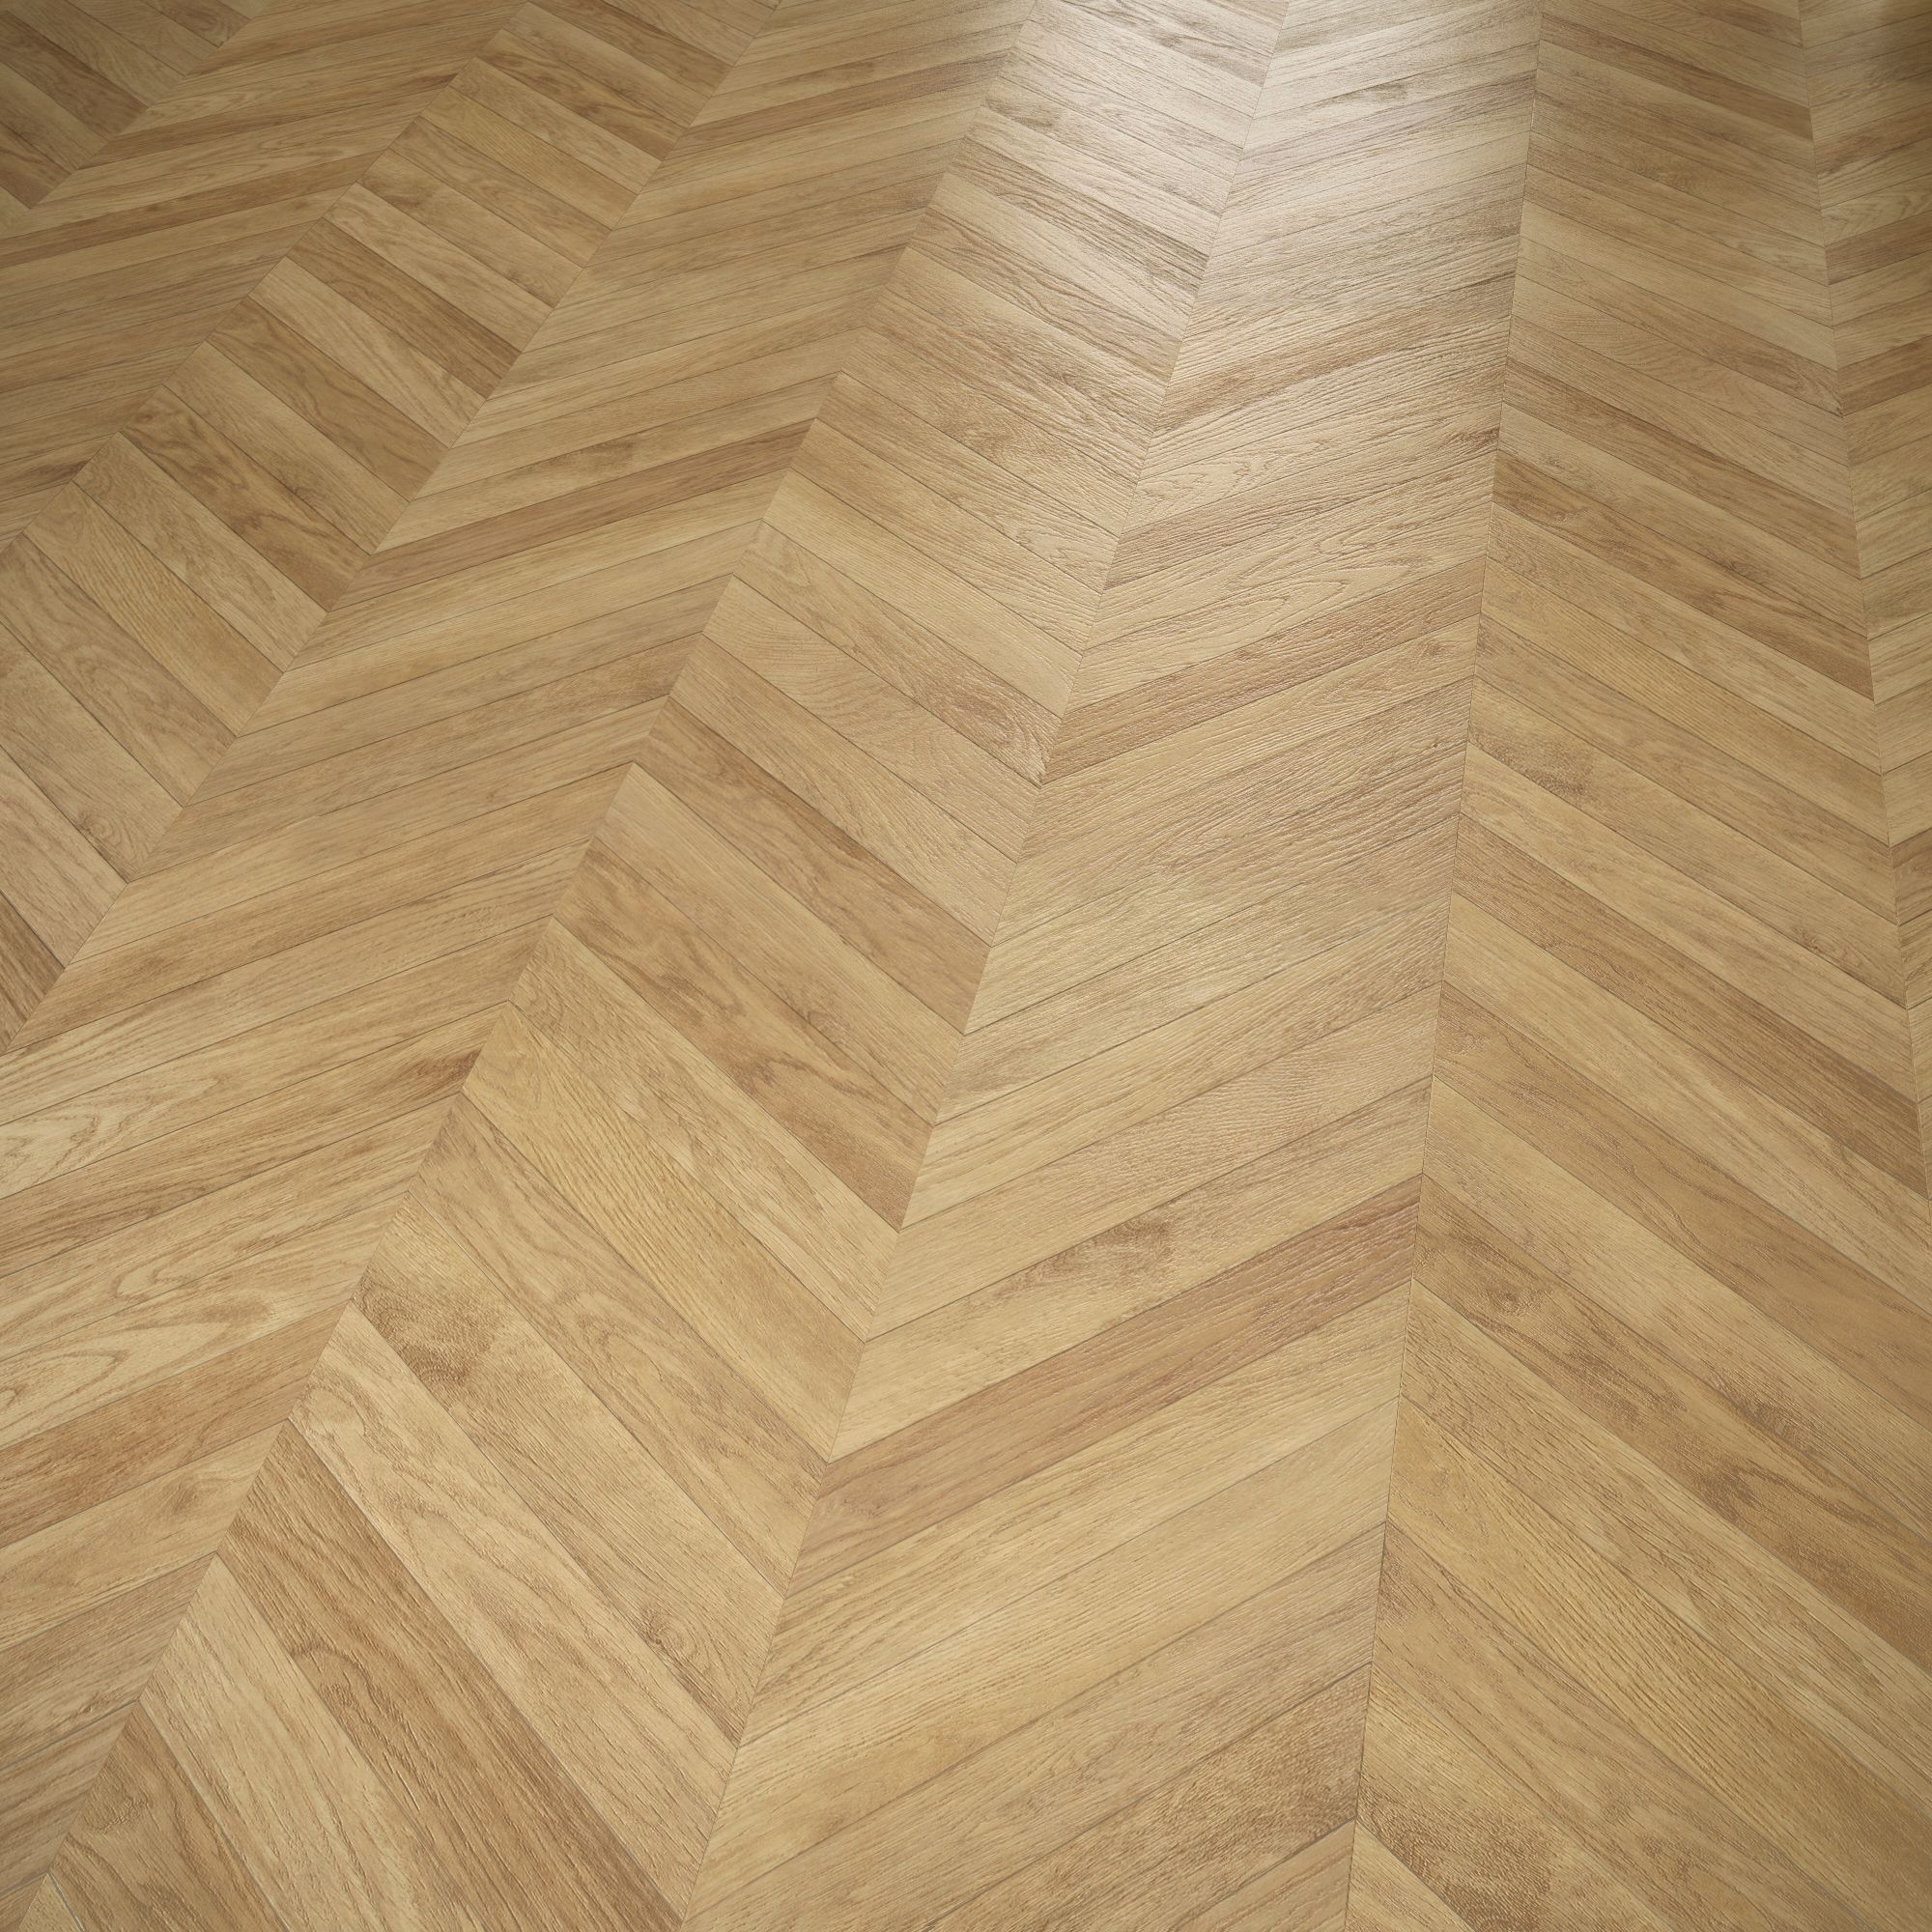 Alessano Herringbone Oak Effect Laminate Flooring 1 39 M Pack